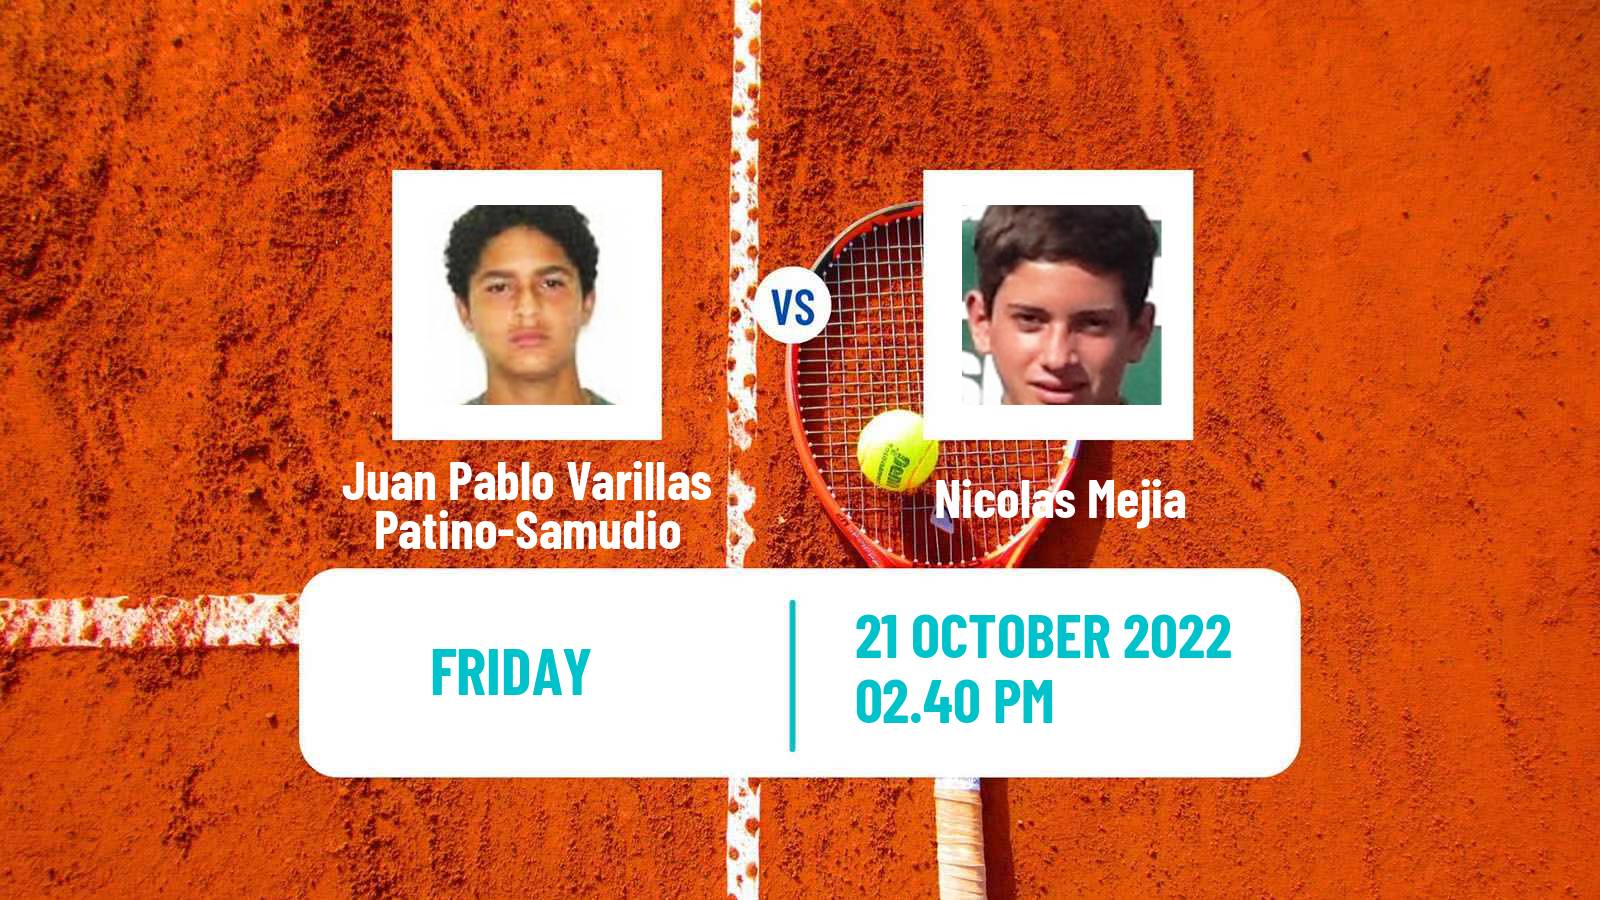 Tennis ATP Challenger Juan Pablo Varillas Patino-Samudio - Nicolas Mejia